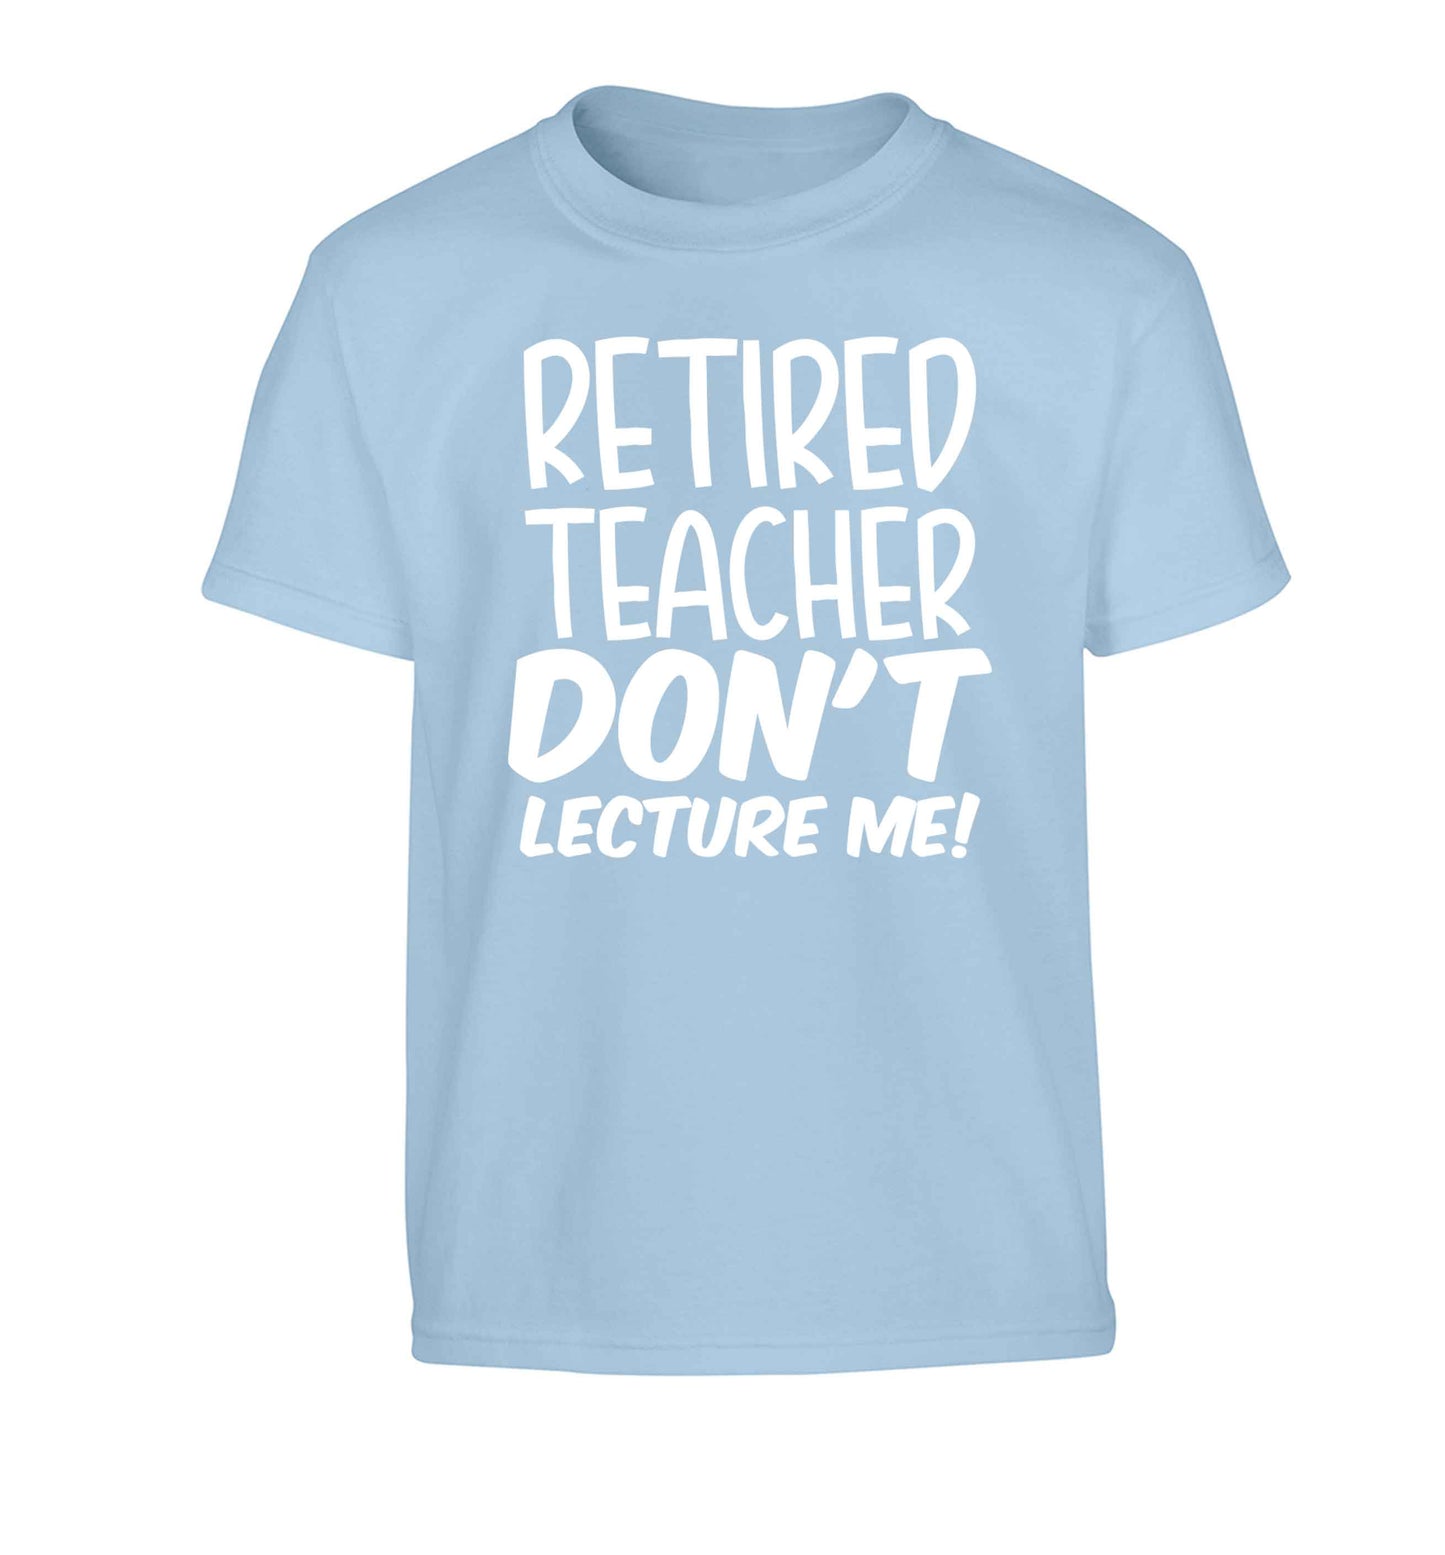 Retired teacher don't lecture me! Children's light blue Tshirt 12-13 Years